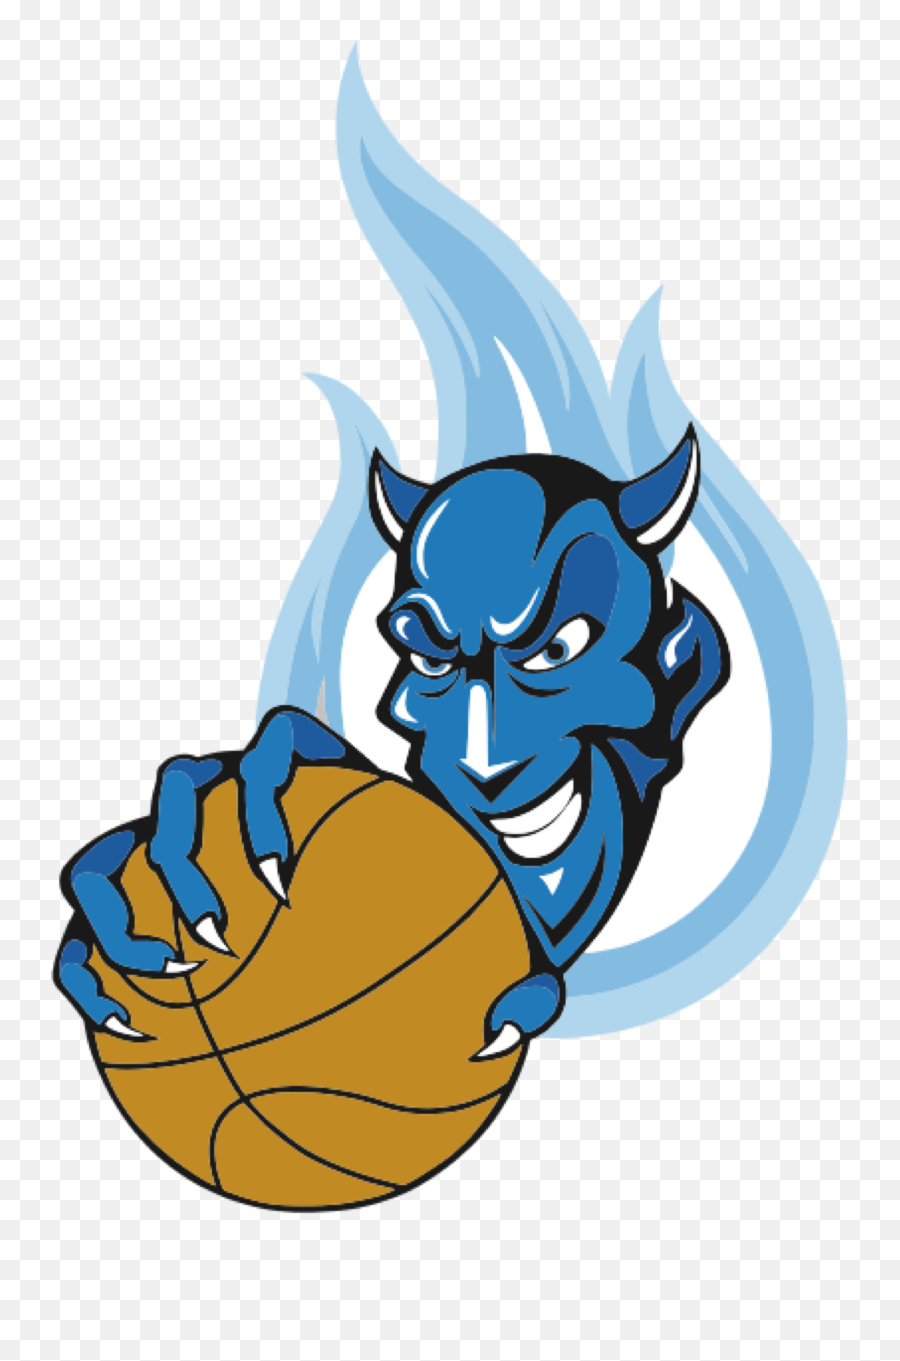 Temporary Tattoos Now In Stock - Duke Blue Devils Menu0027s Blue Devil Cartoon Playing Basketball Emoji,Duke Blue Devils Logo